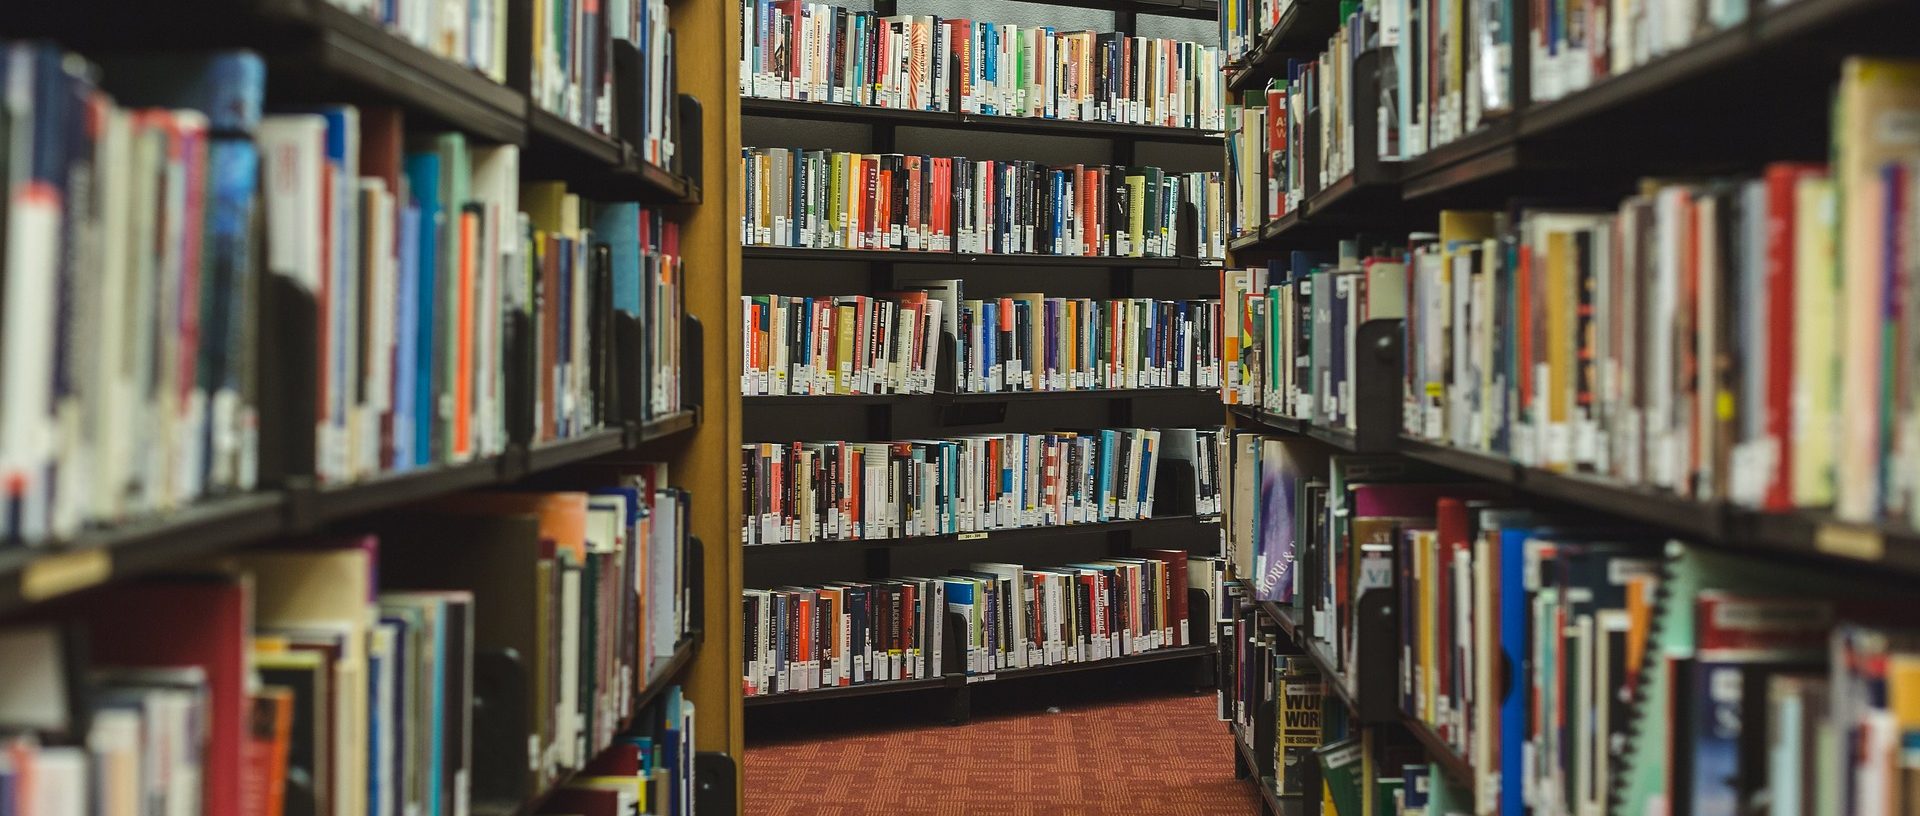 Books in a library - scientific research into Long Covid